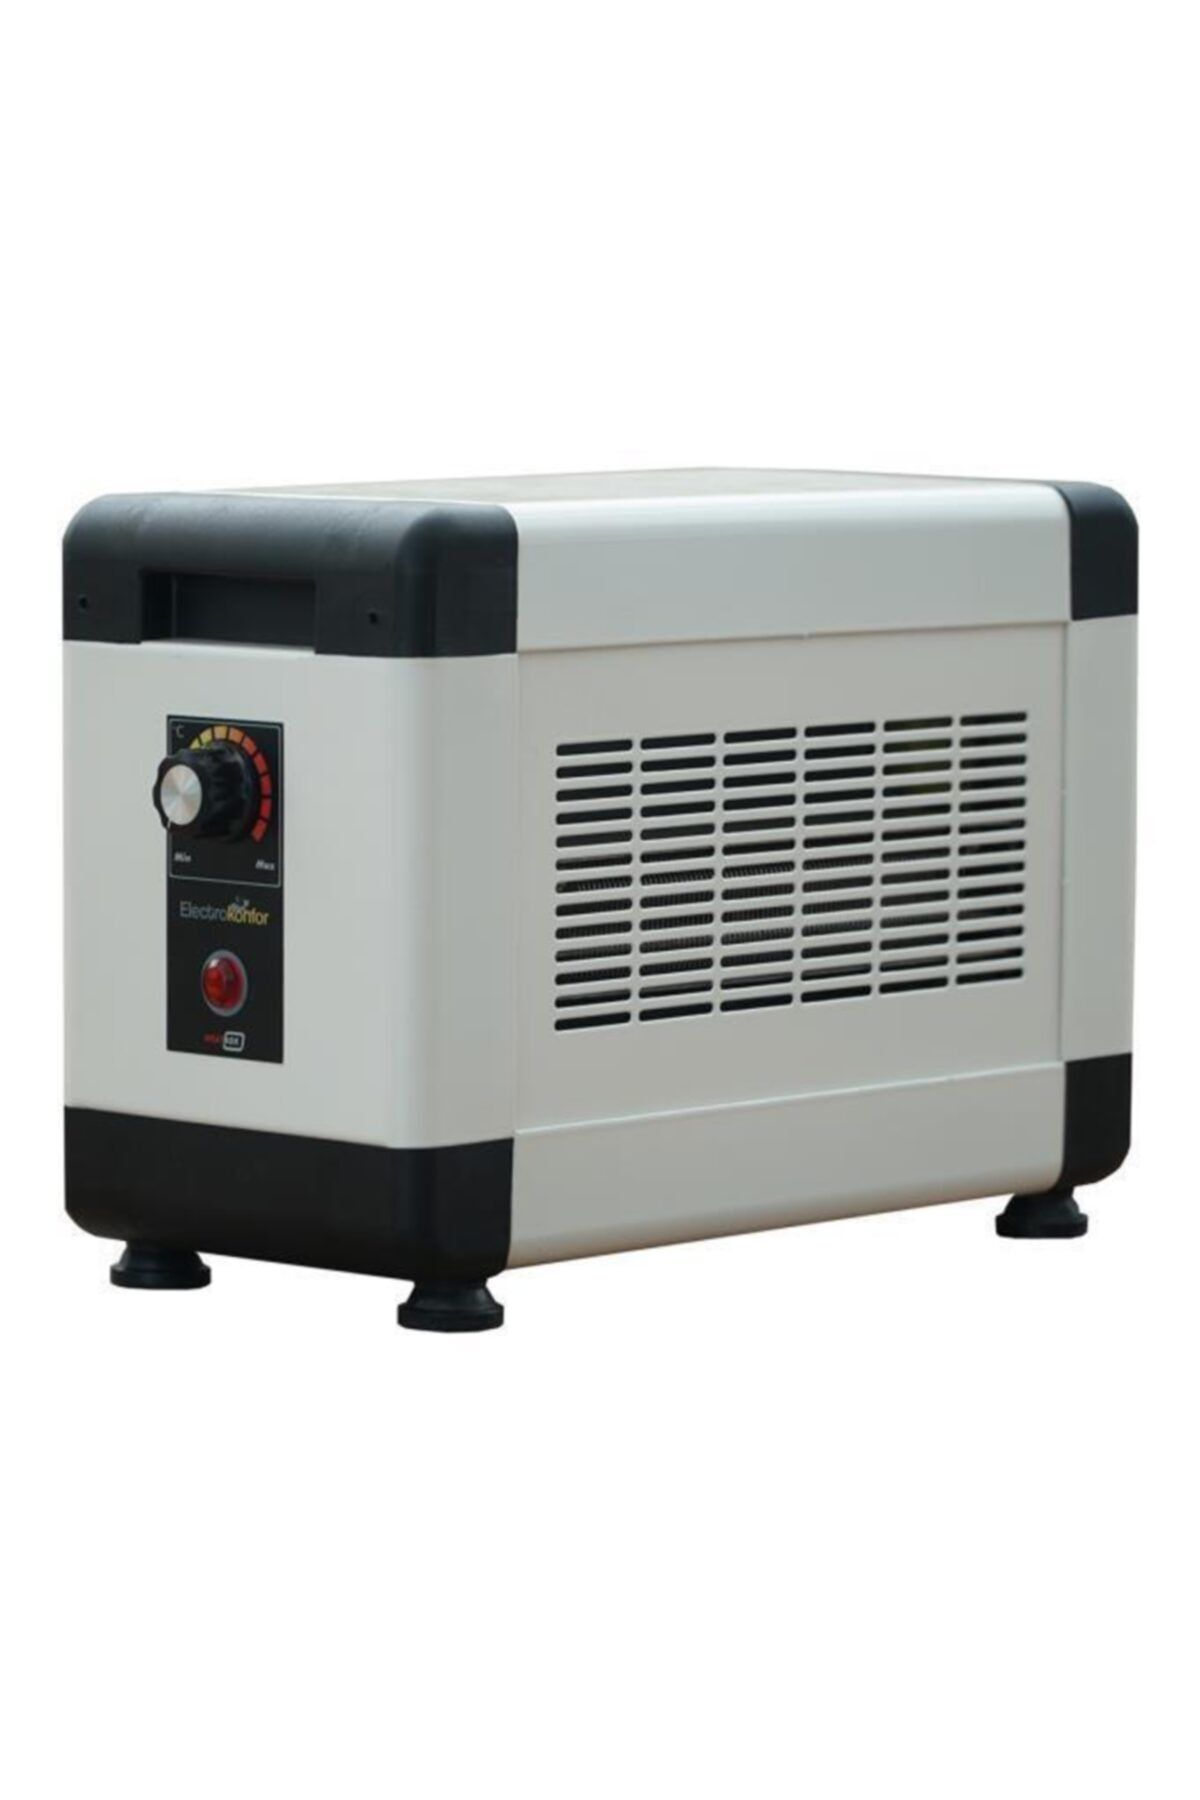 Genel Markalar Elektrokonfor Heatbox Board Mini Krem Renk Elektrikli Fanlı Isıtıcı 2000 Watt